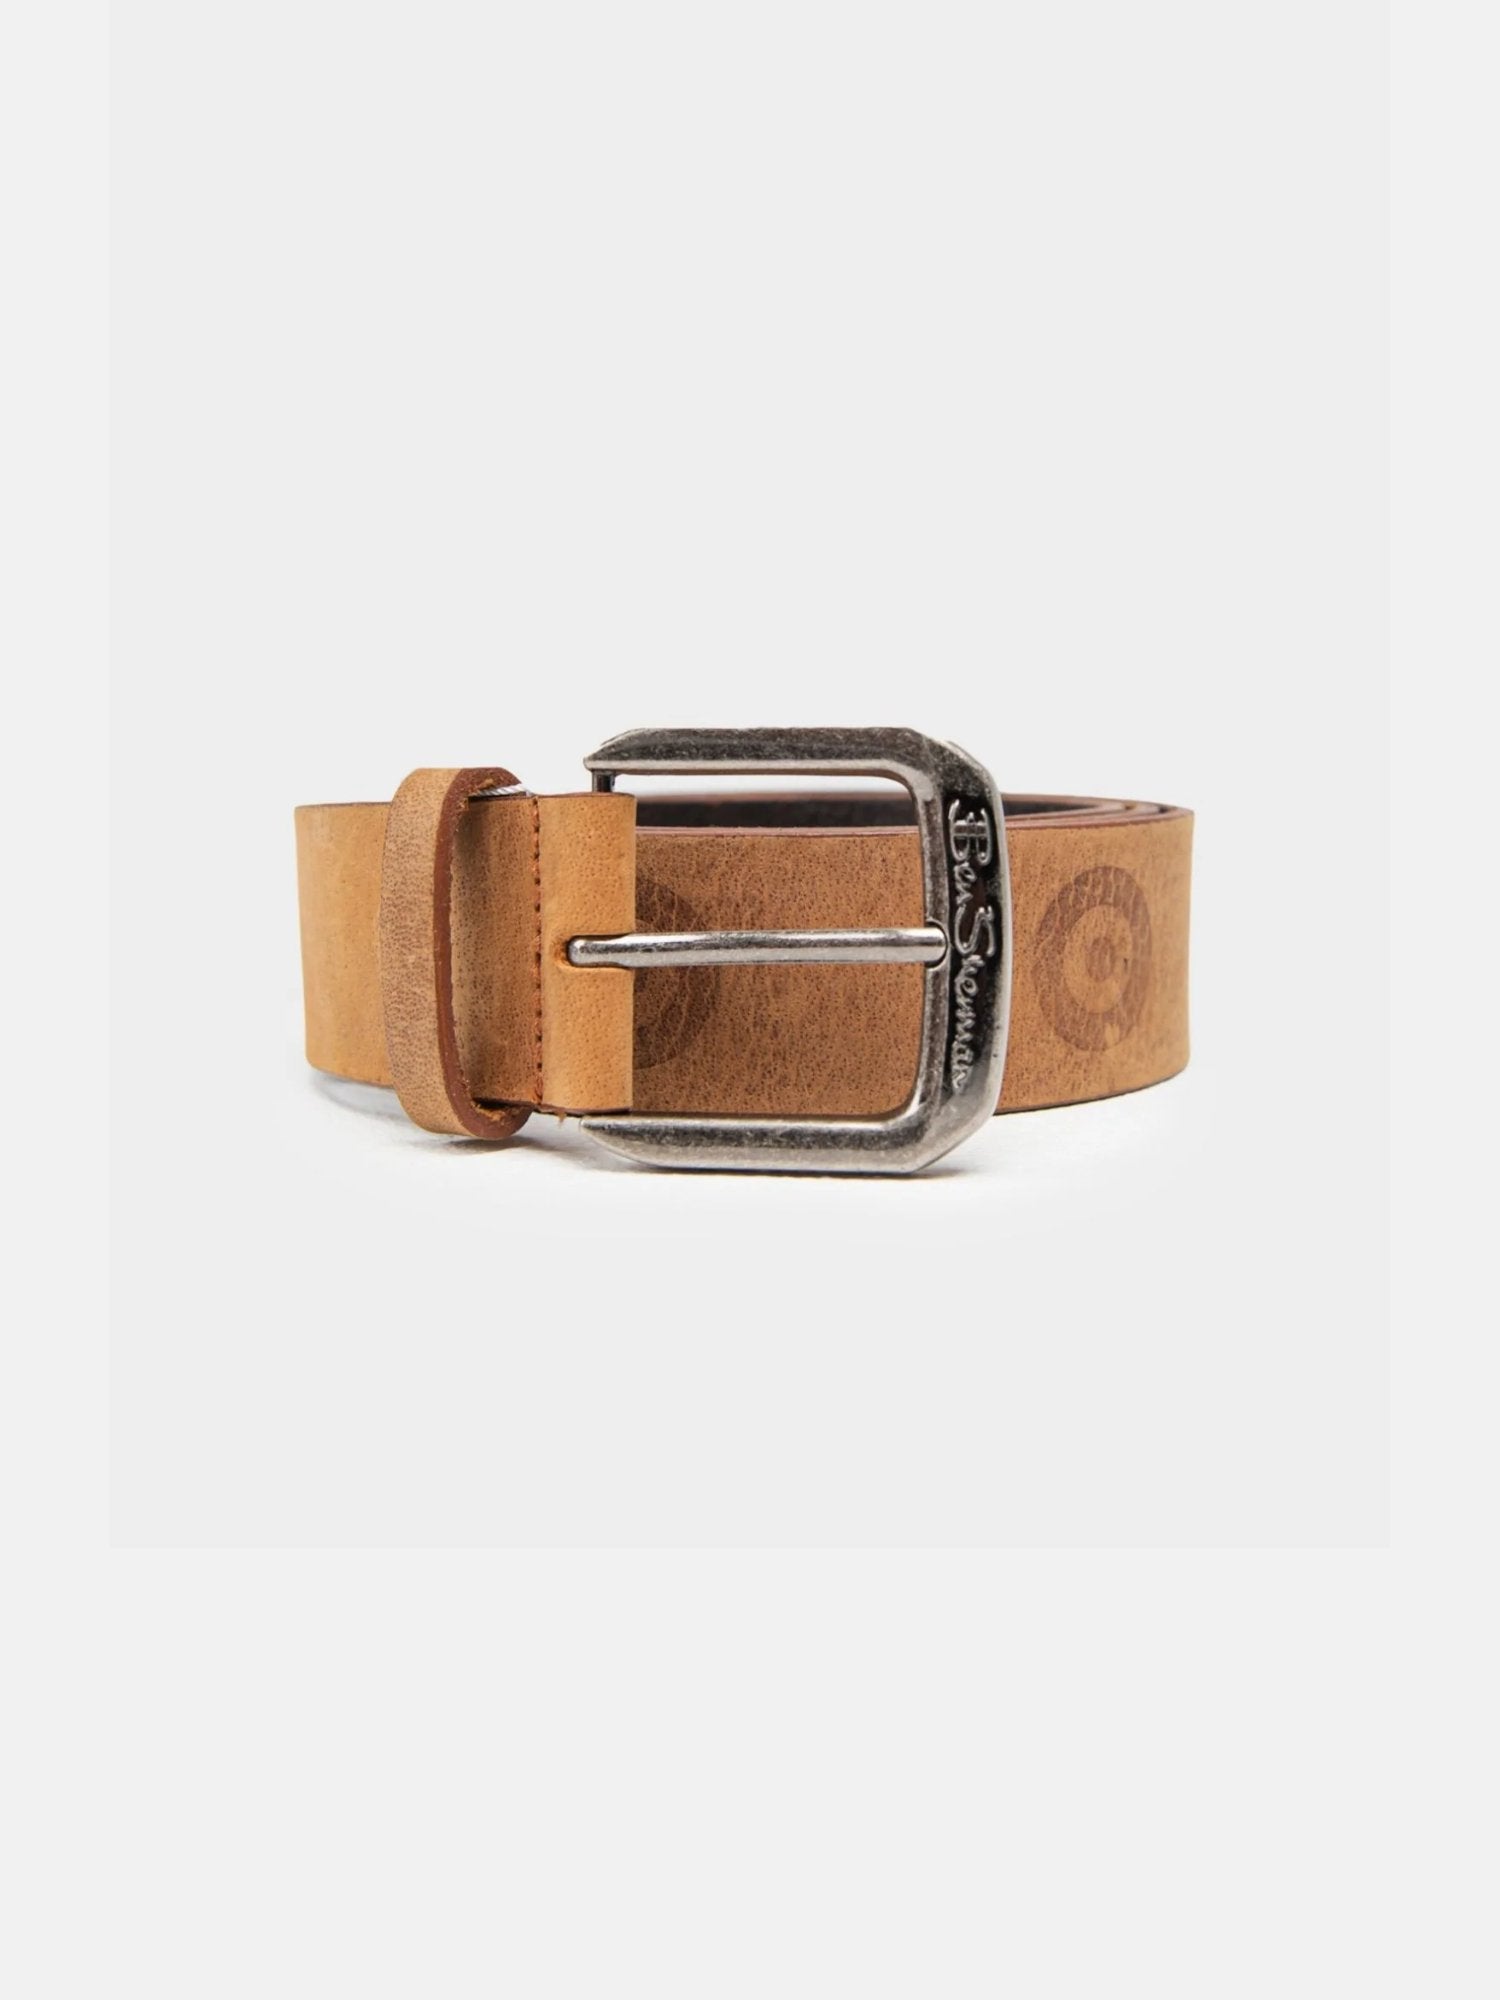 Target Embossed Belt (Leather) - Tan